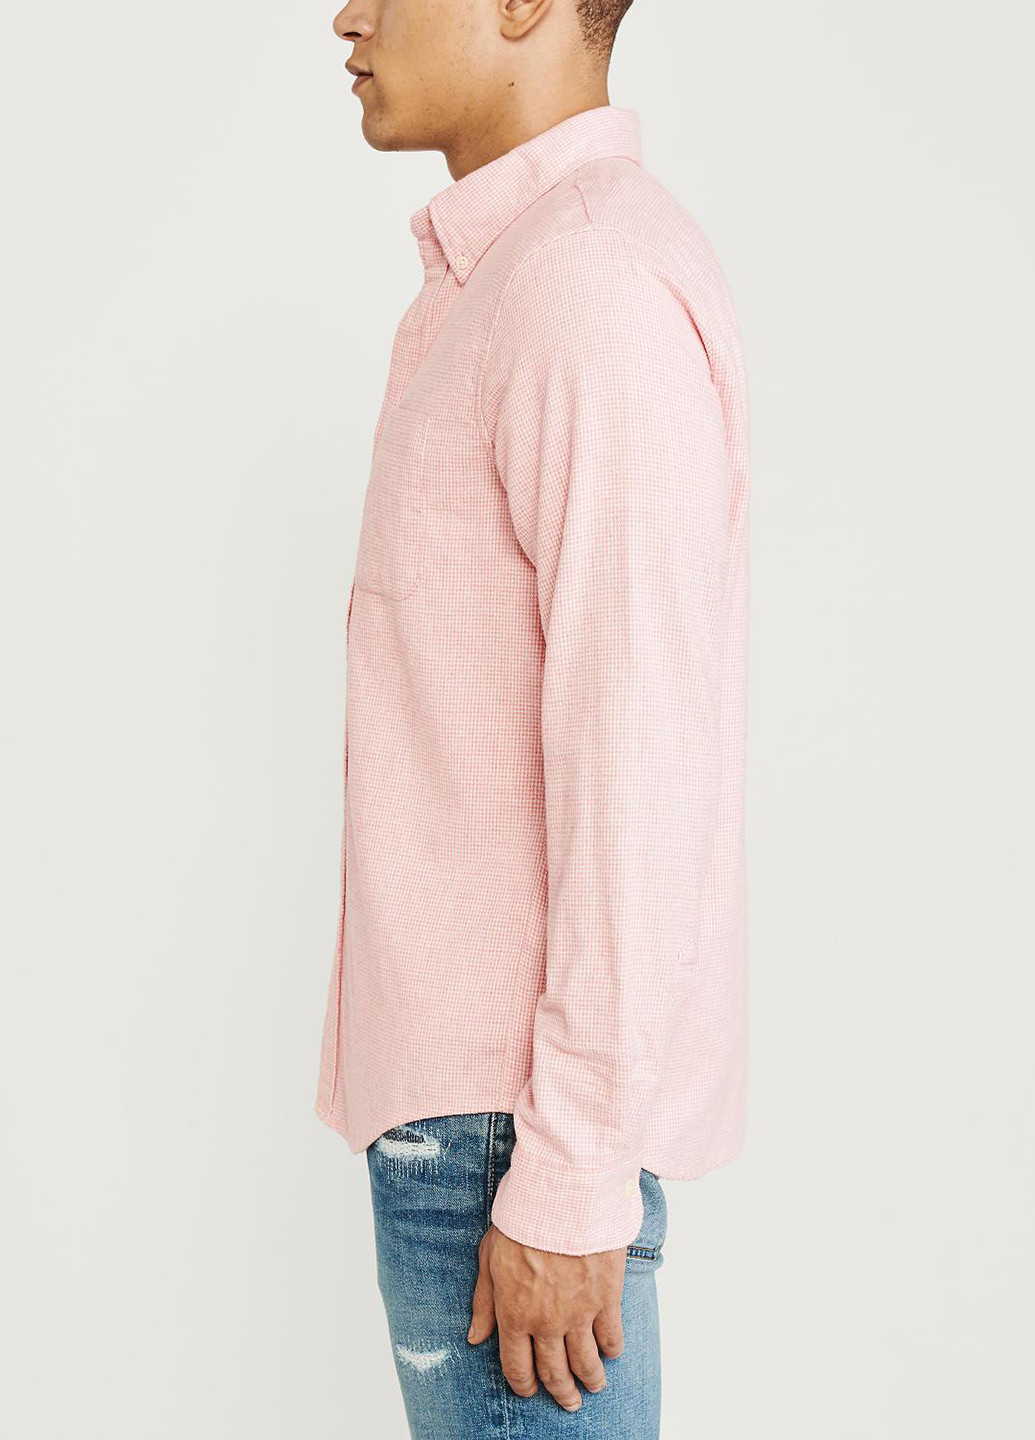 Светло-розовая кэжуал рубашка в клетку Abercrombie & Fitch